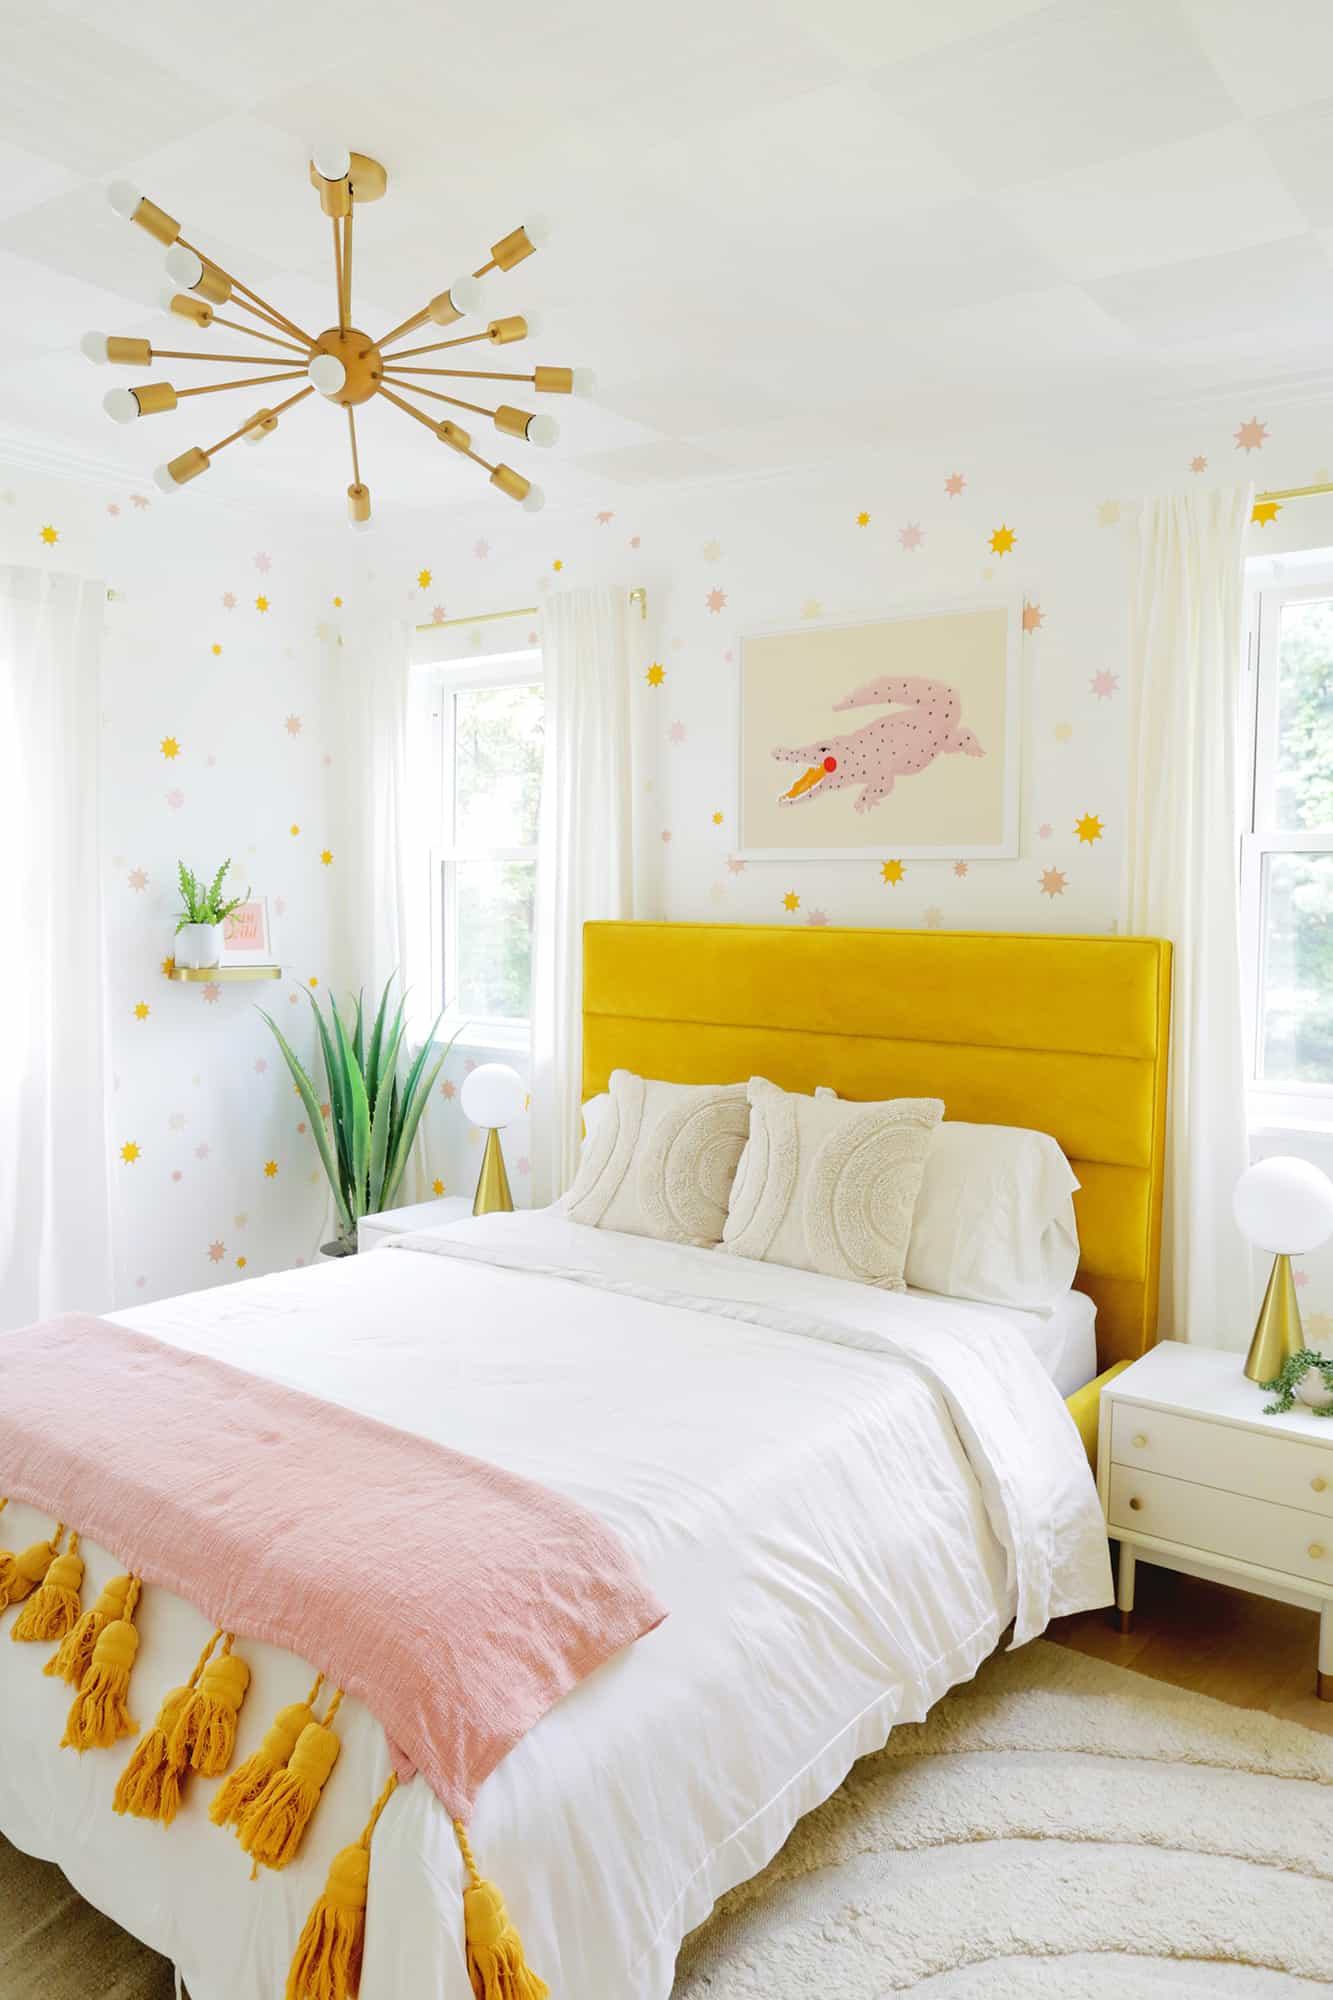 velvet bed frame with pillows and star wallpaper